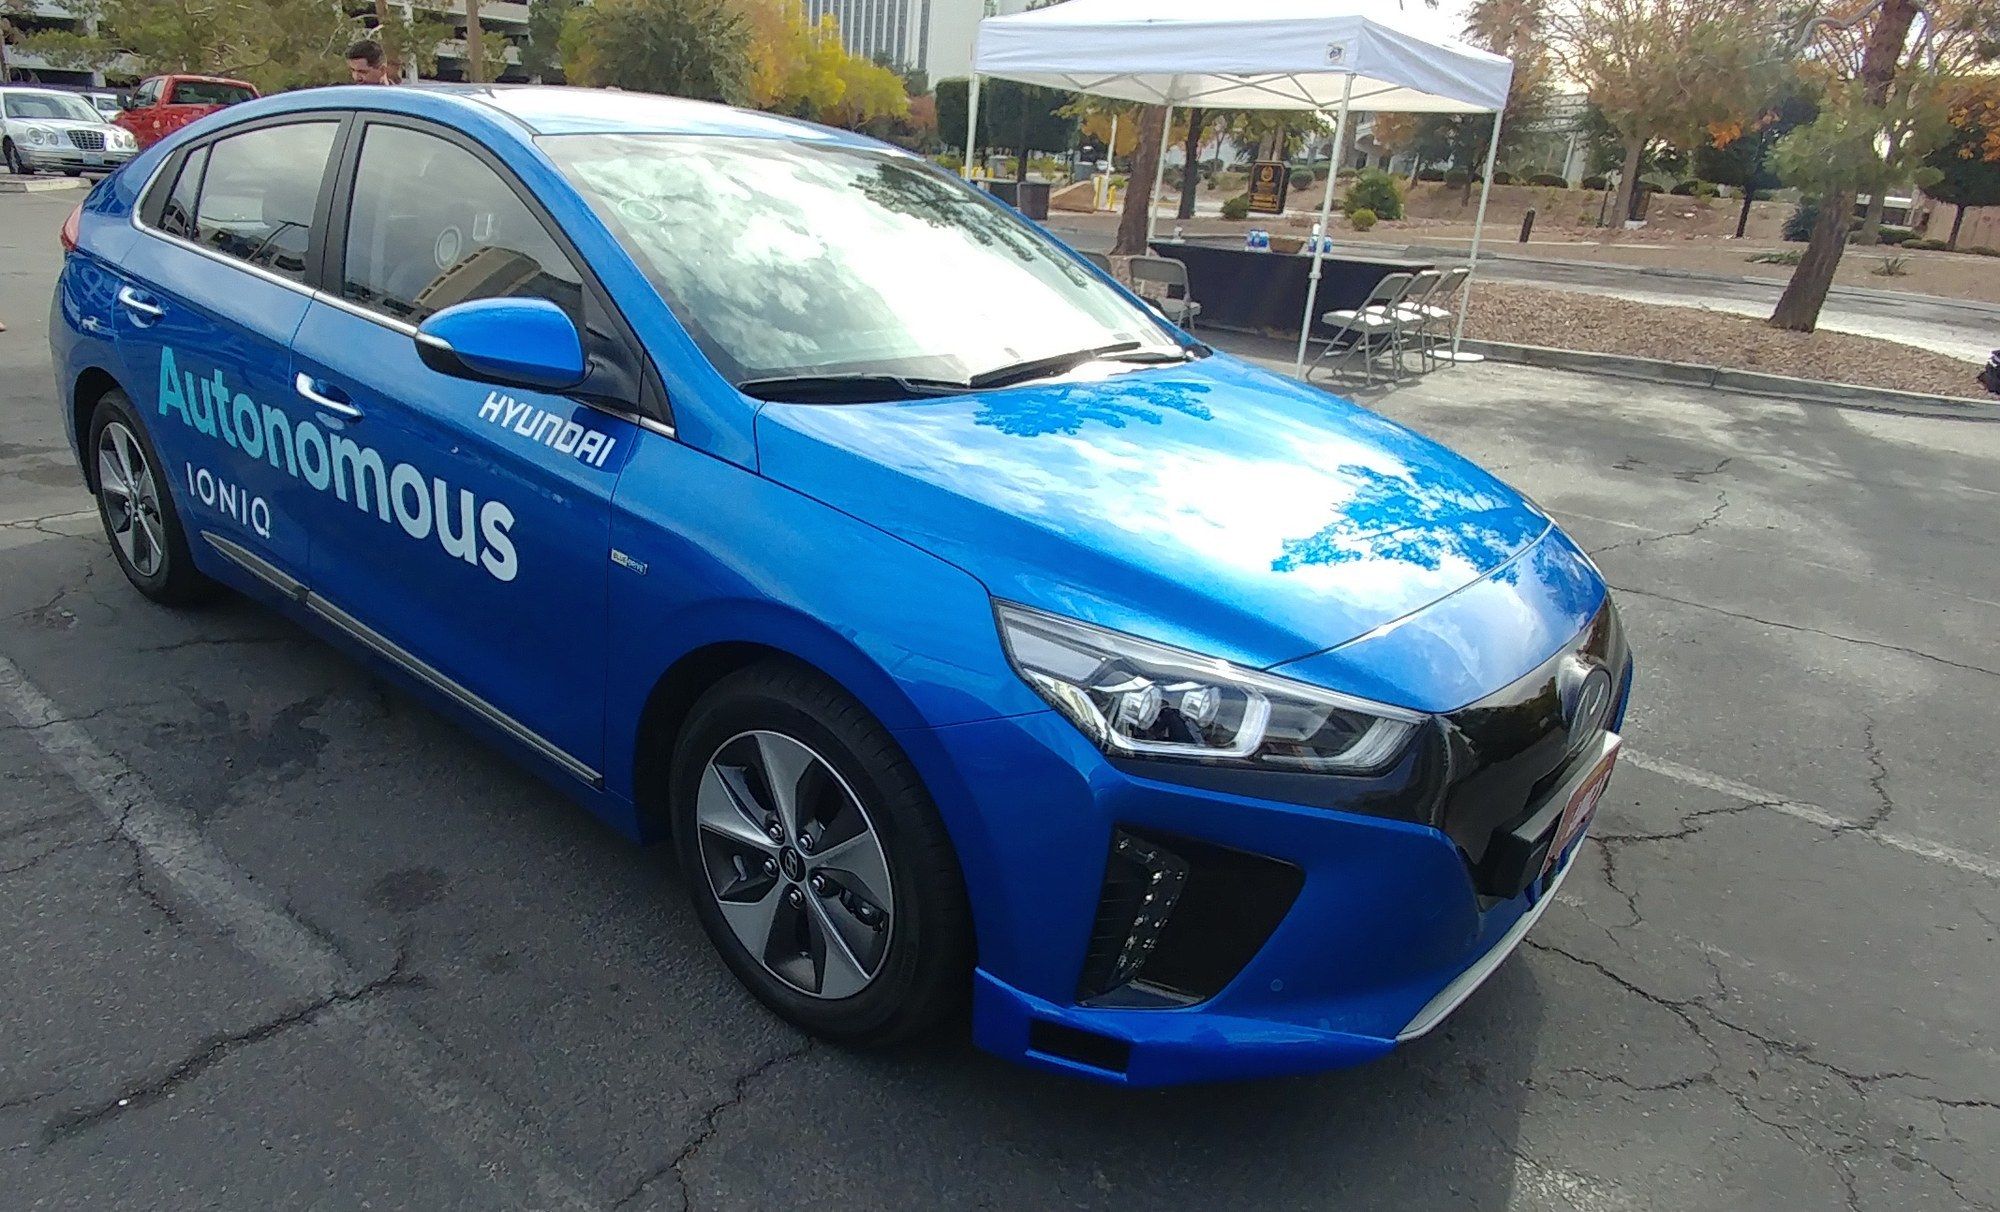 Hyundai Ioniq test vehicle CES 2017